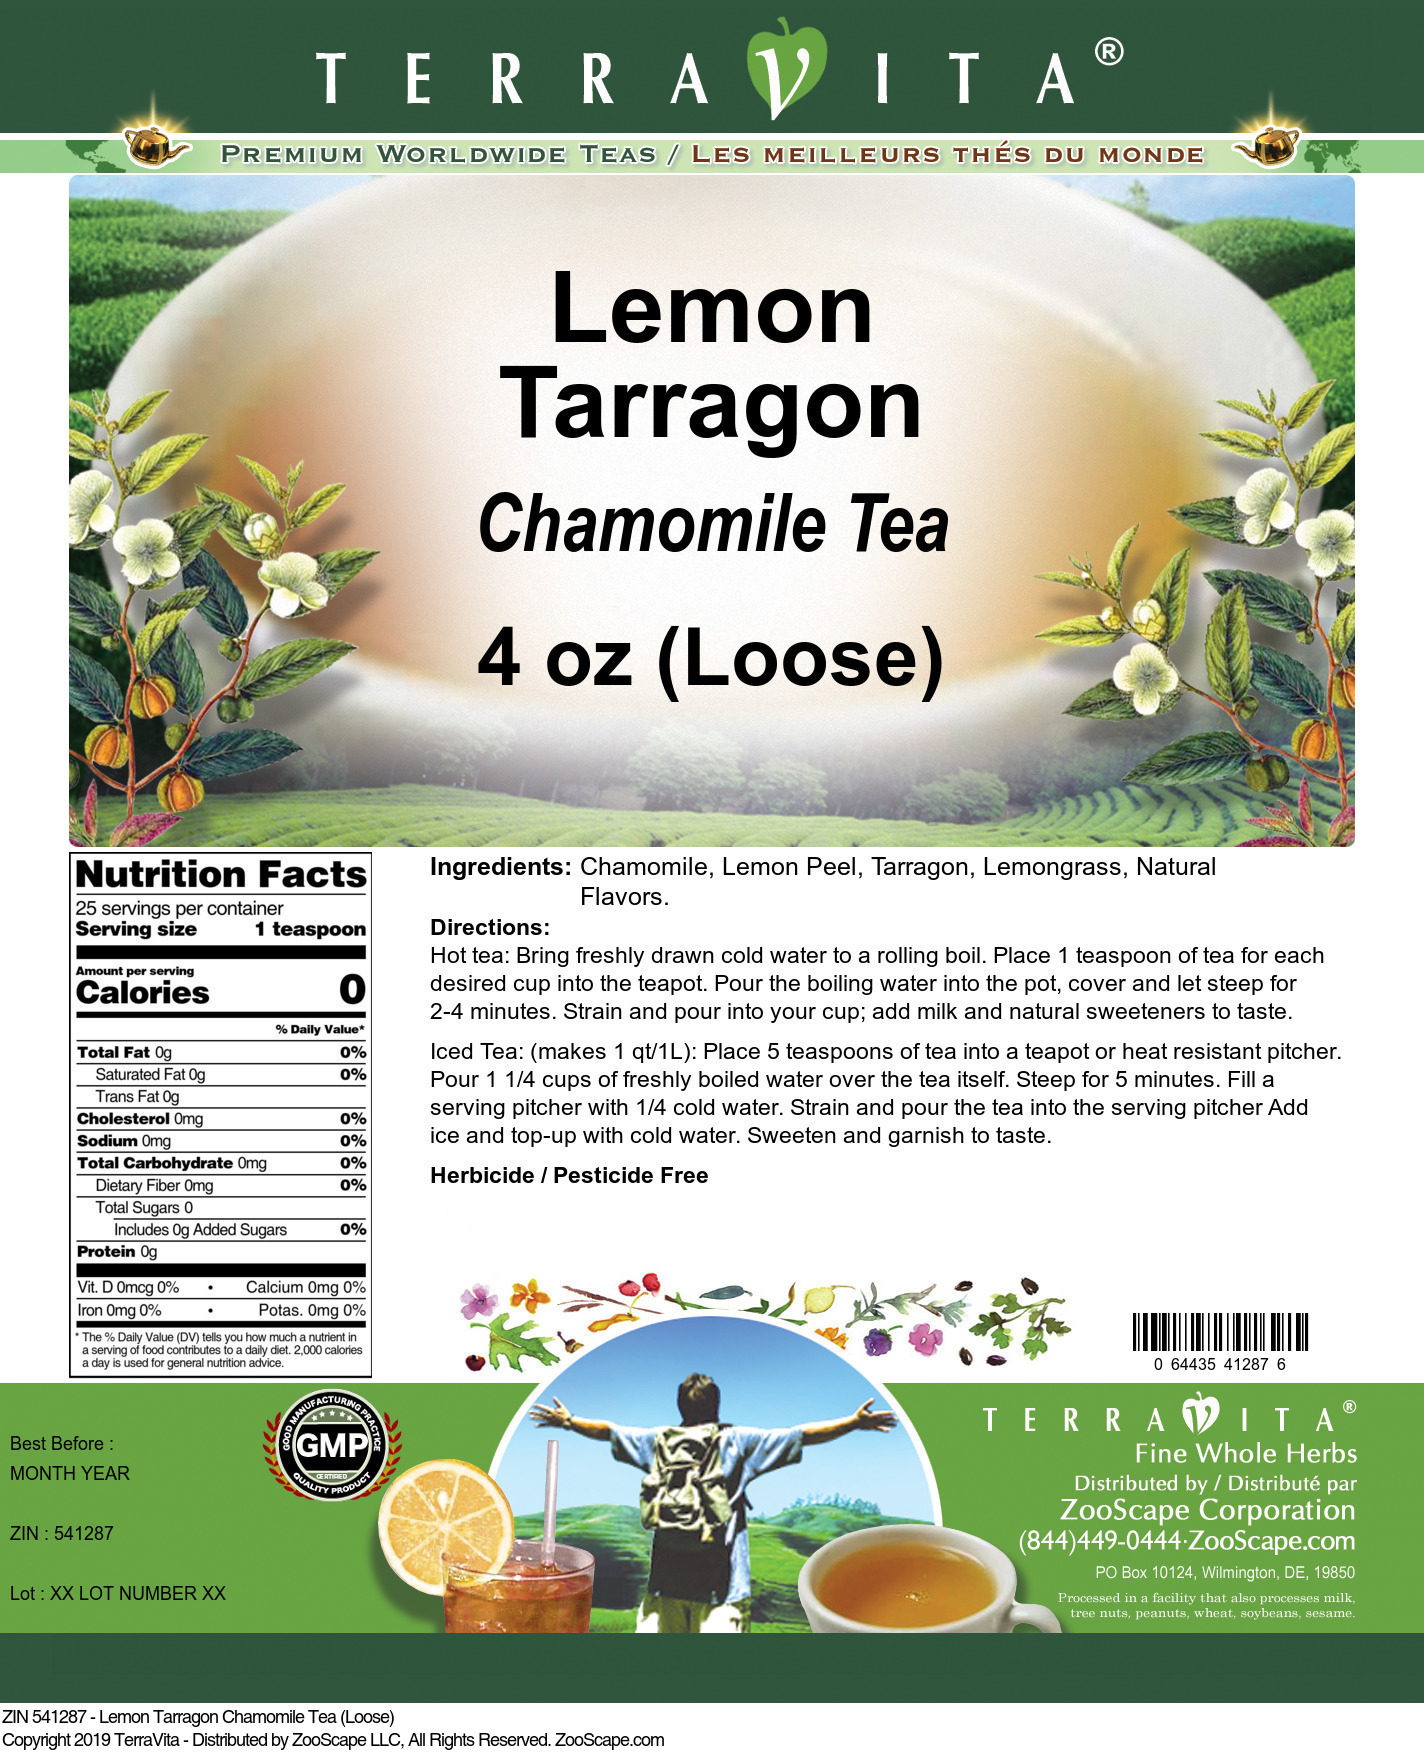 Lemon Tarragon Chamomile Tea (Loose) - Label